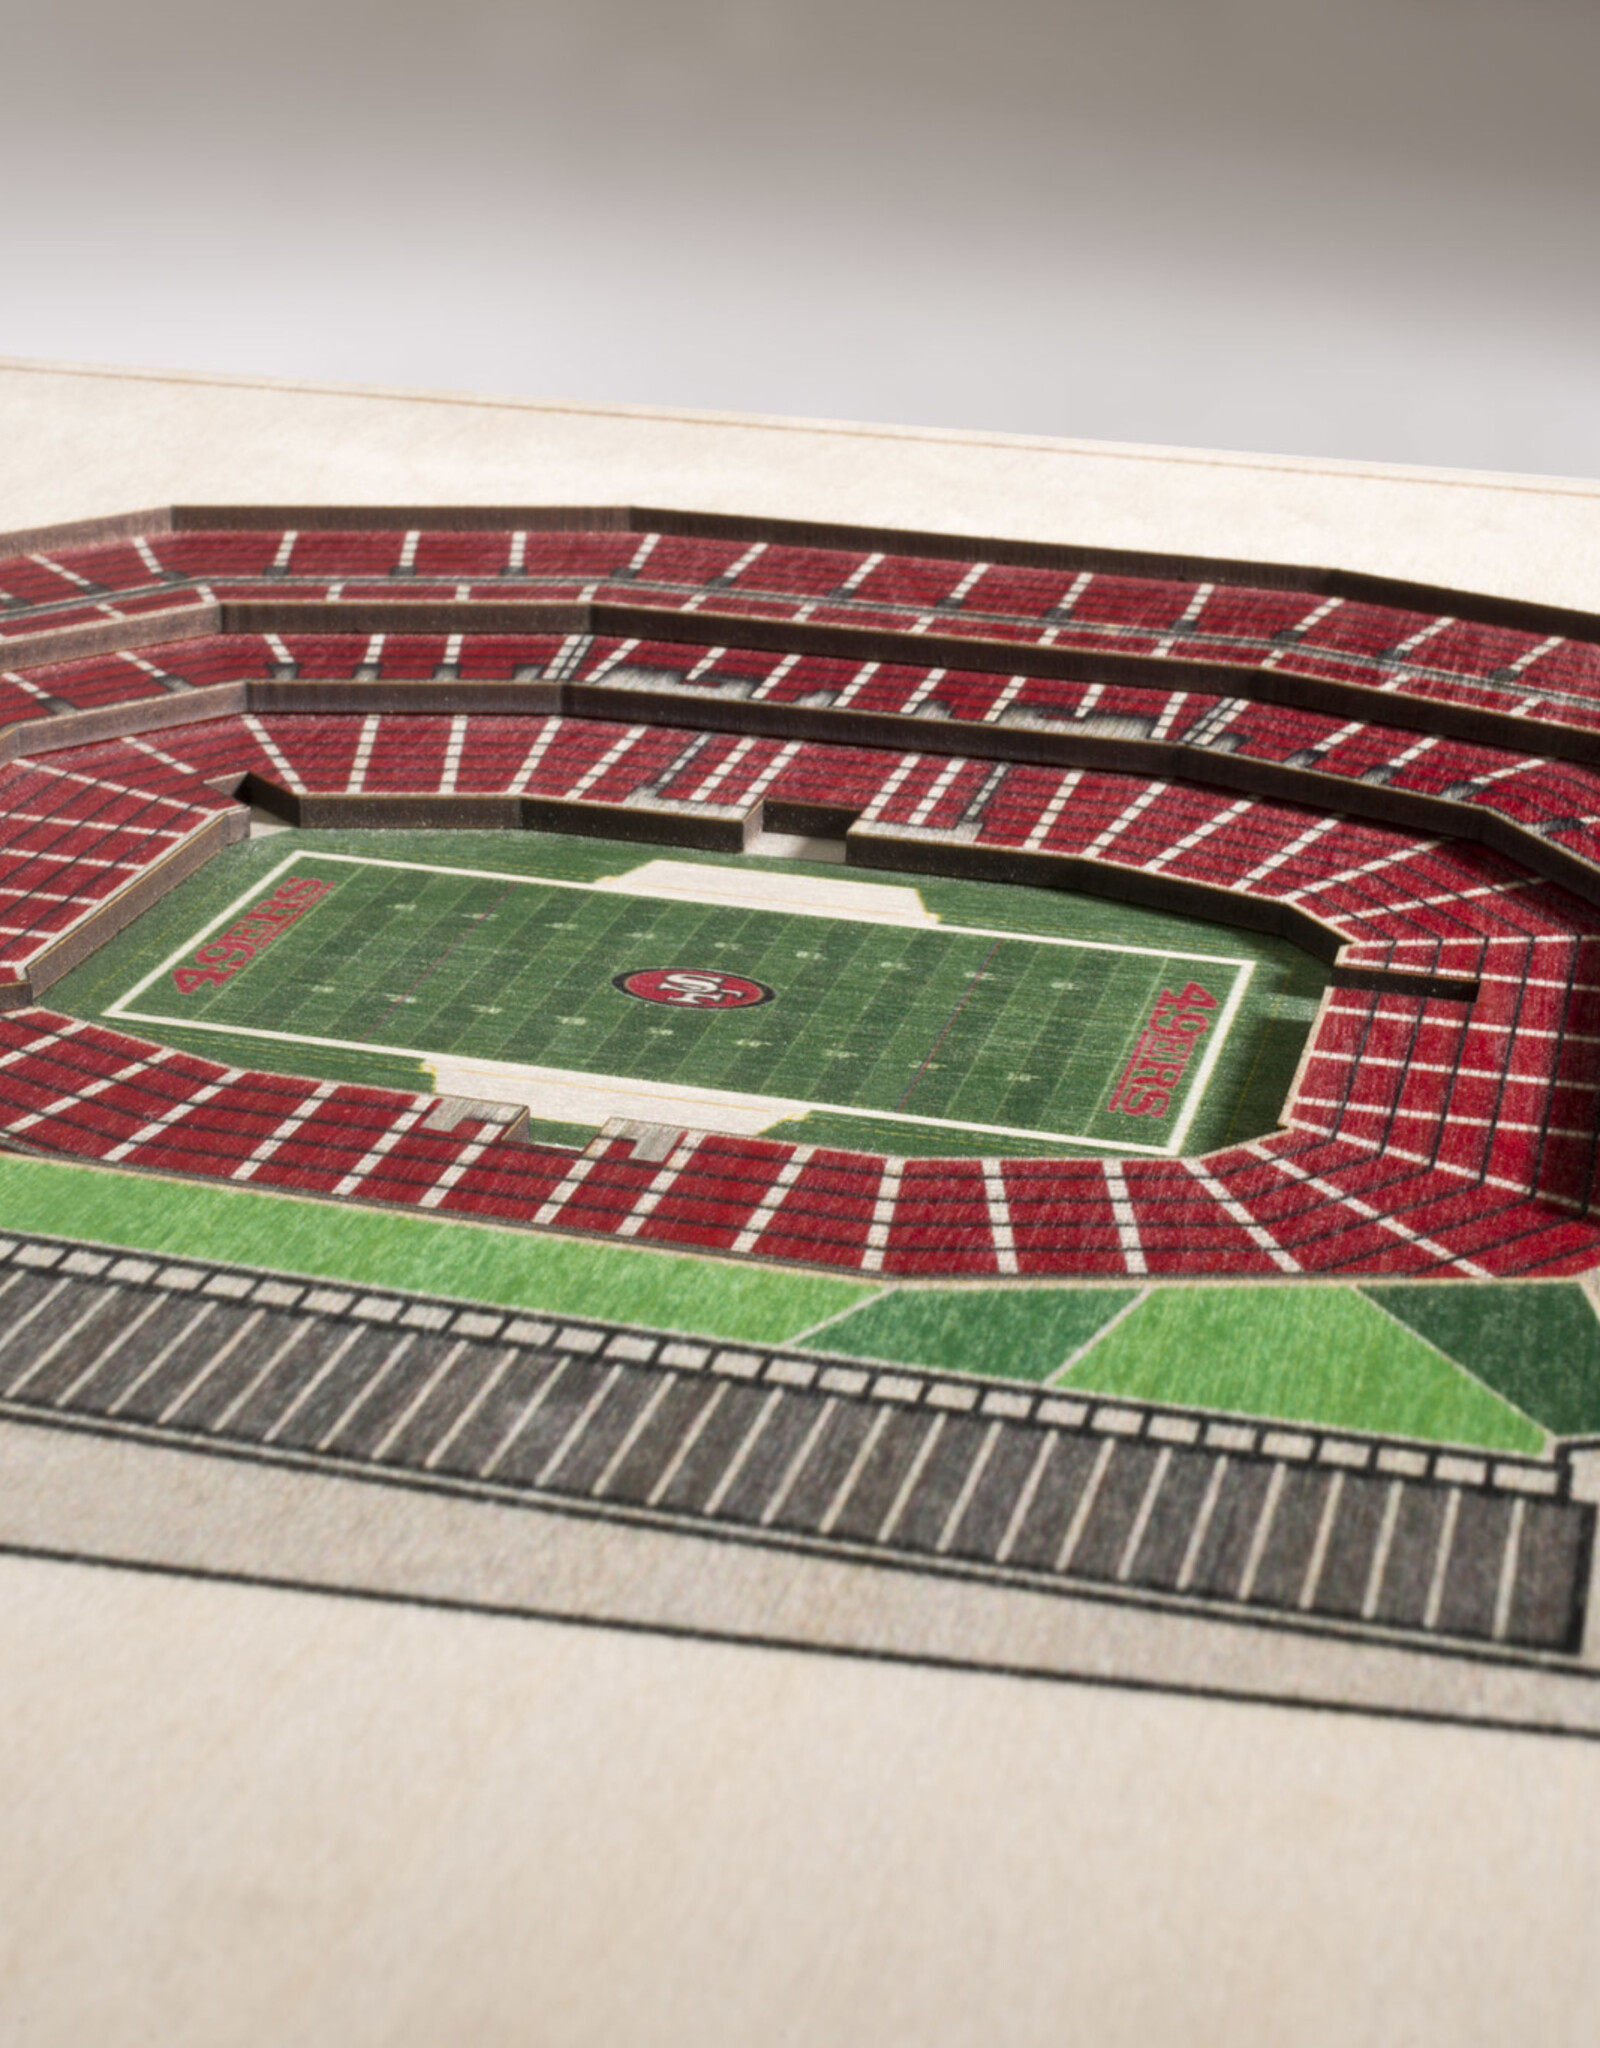 YOU THE FAN San Francisco 49ers 5-Layer 3D StadiumView Wall Art